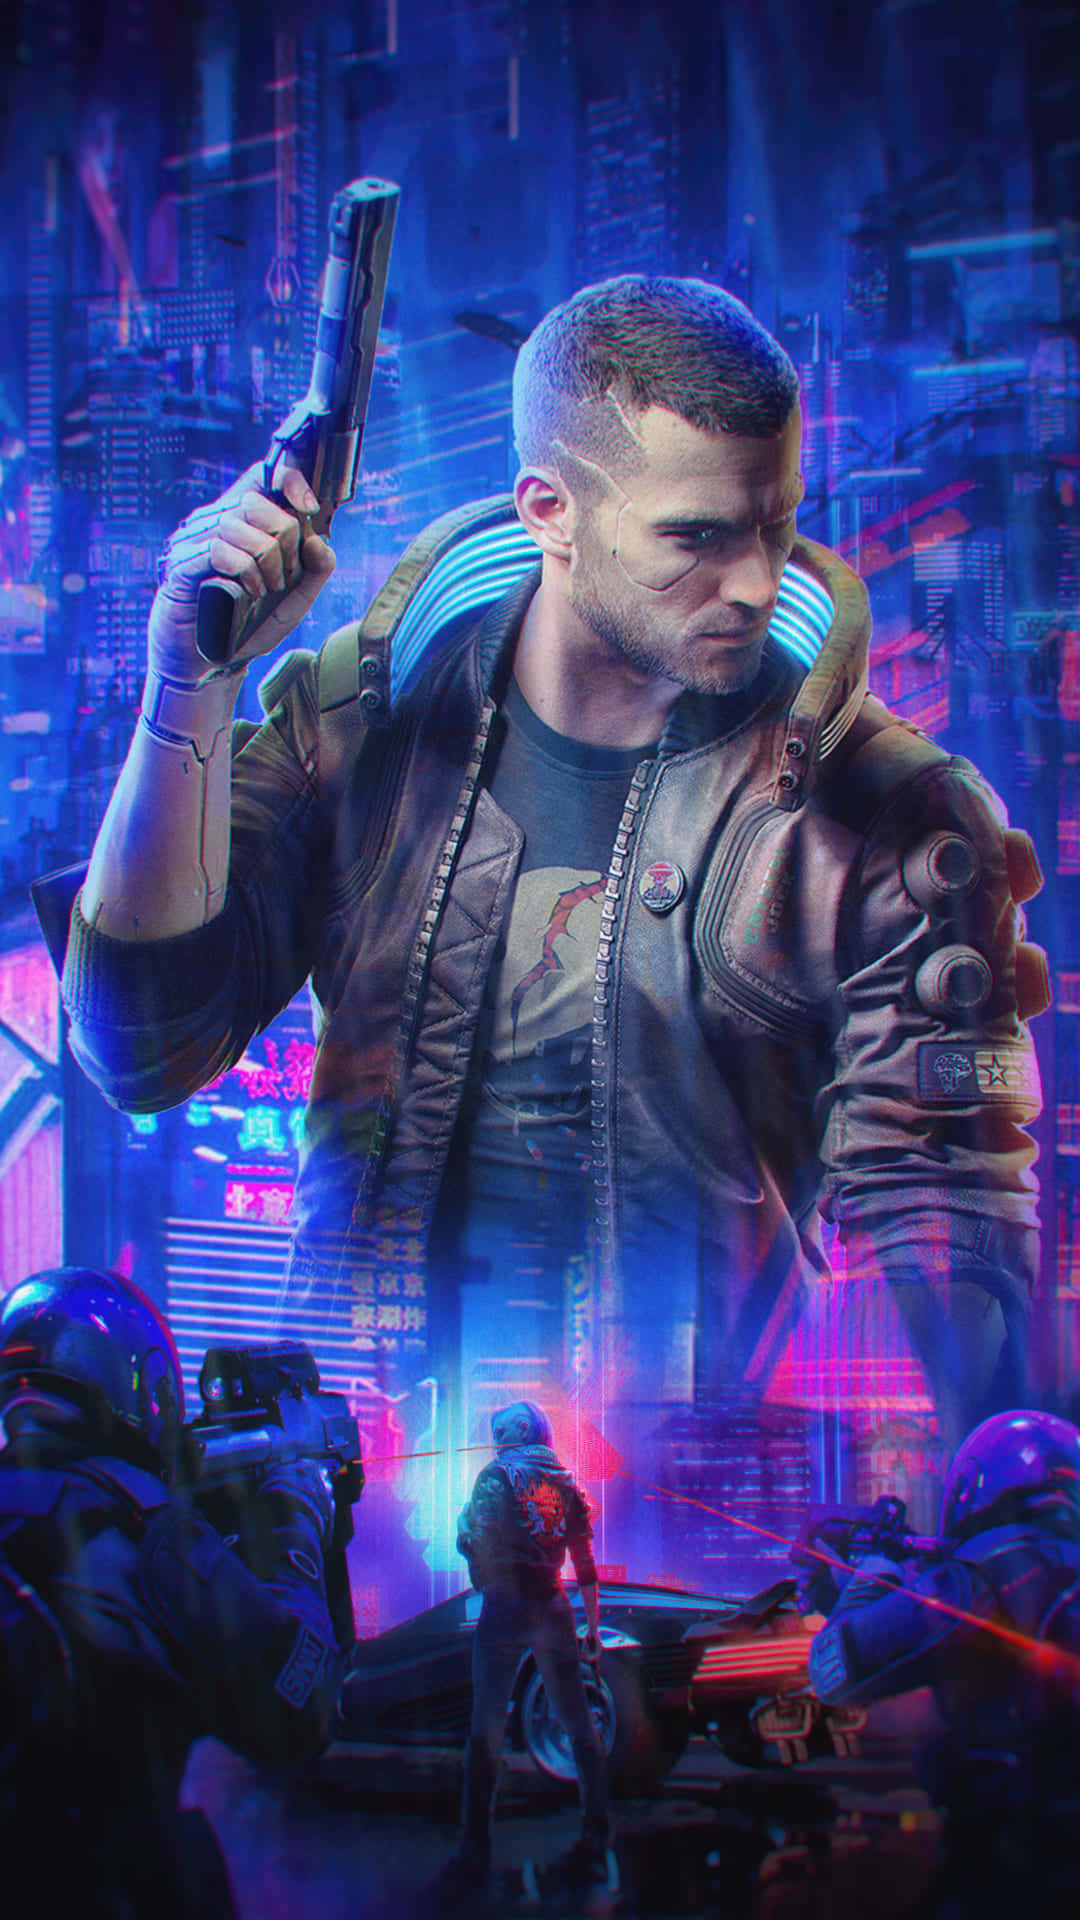 Iphonexs Max Cyberpunk 2077 Valerie Vincent Bakgrundsbild.